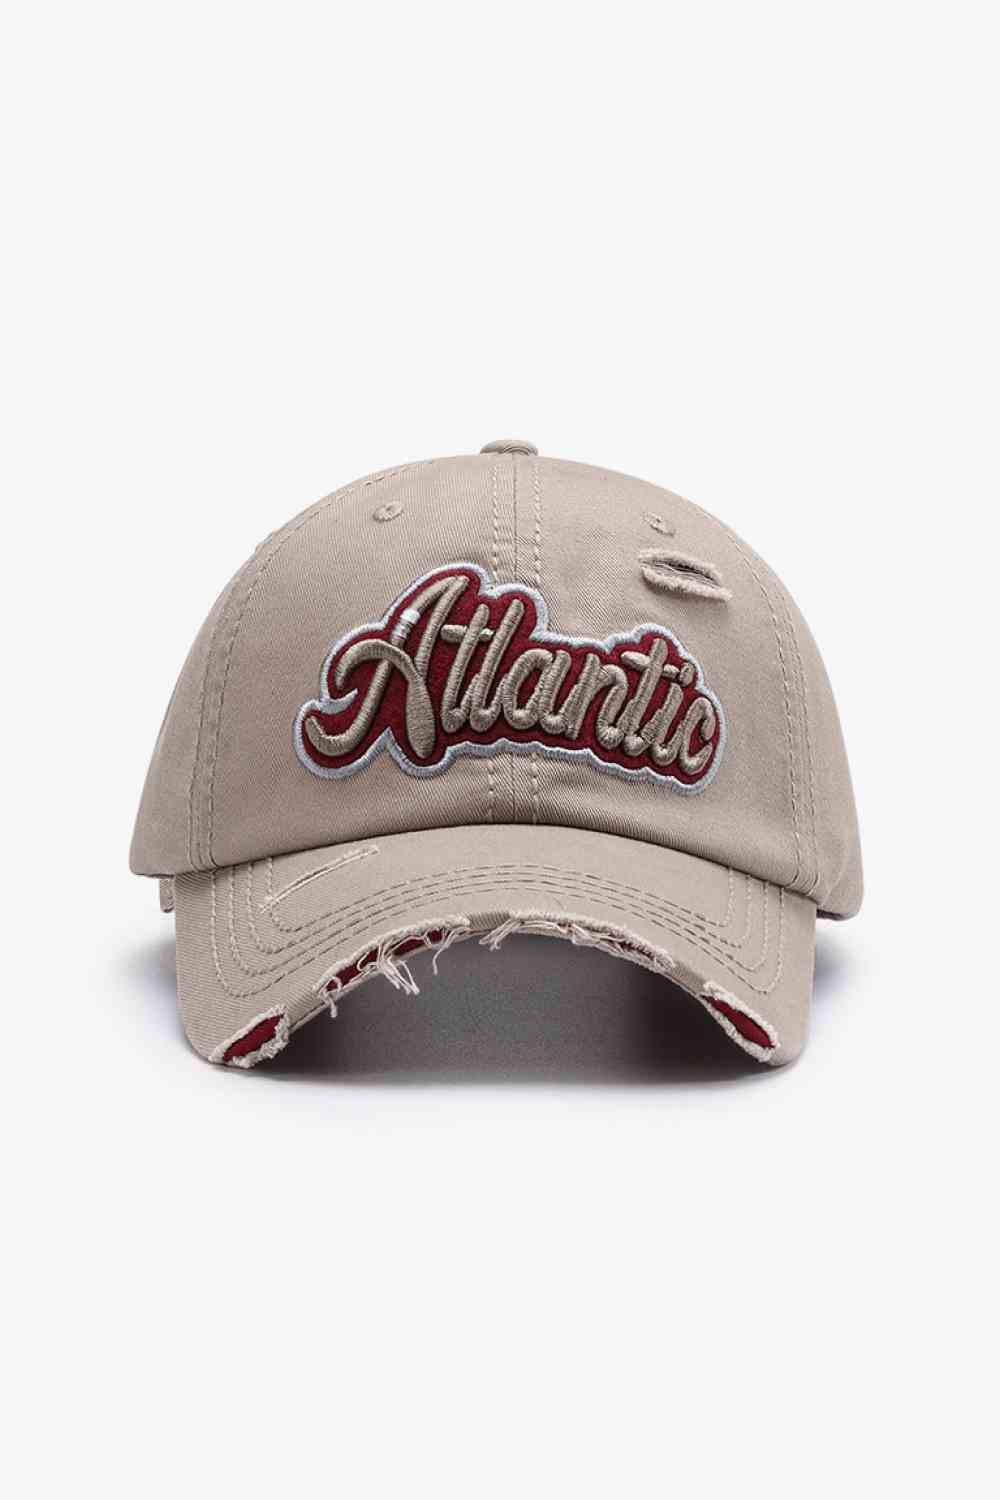 ATLANTIC Graphic Distressed Baseball Cap Khaki One Size